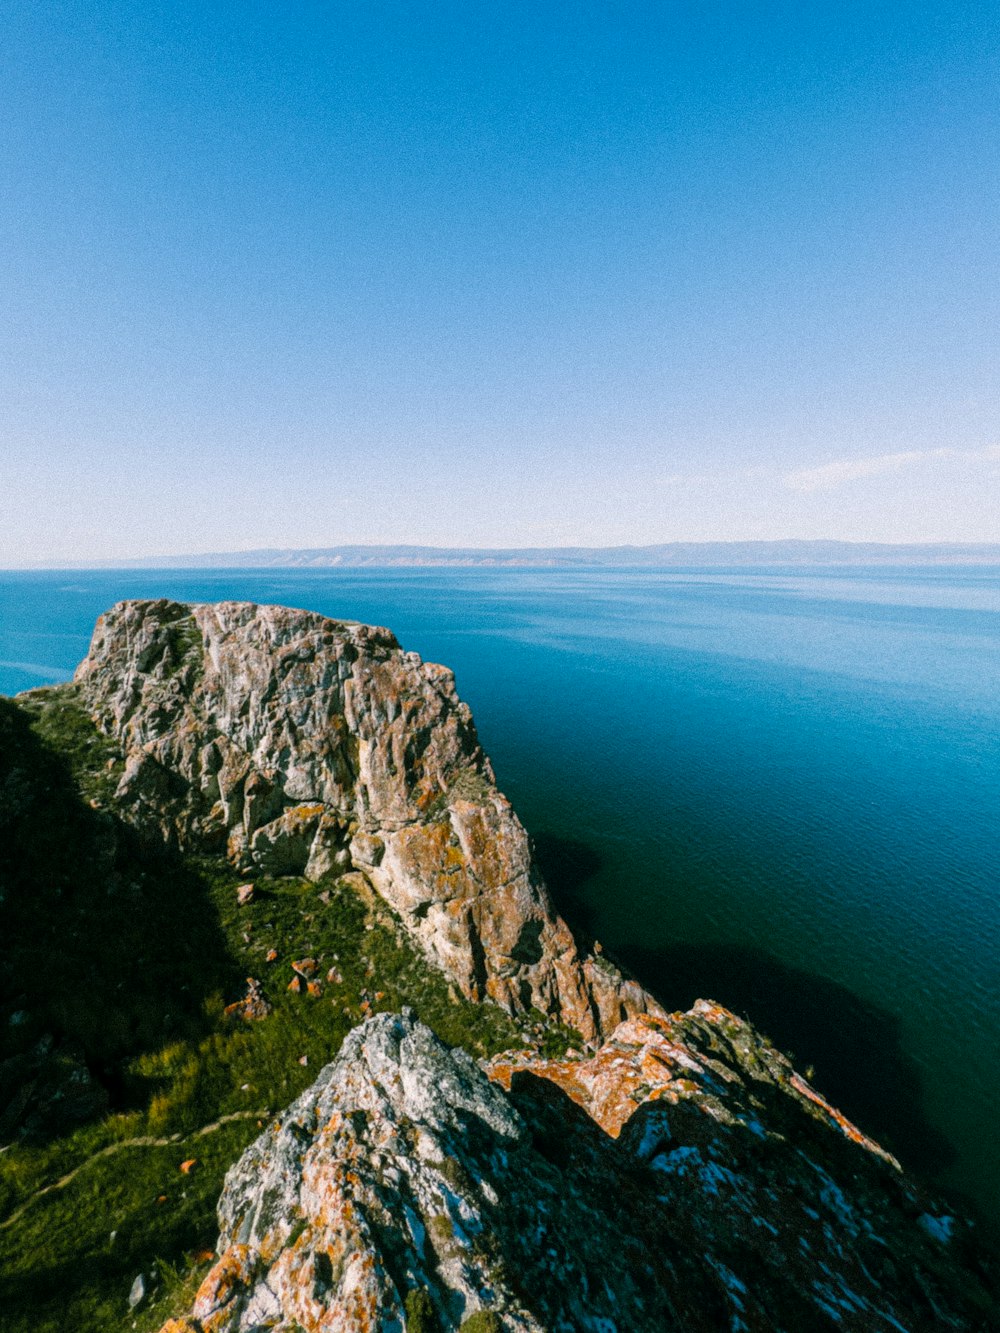 a cliff overlooking the ocean